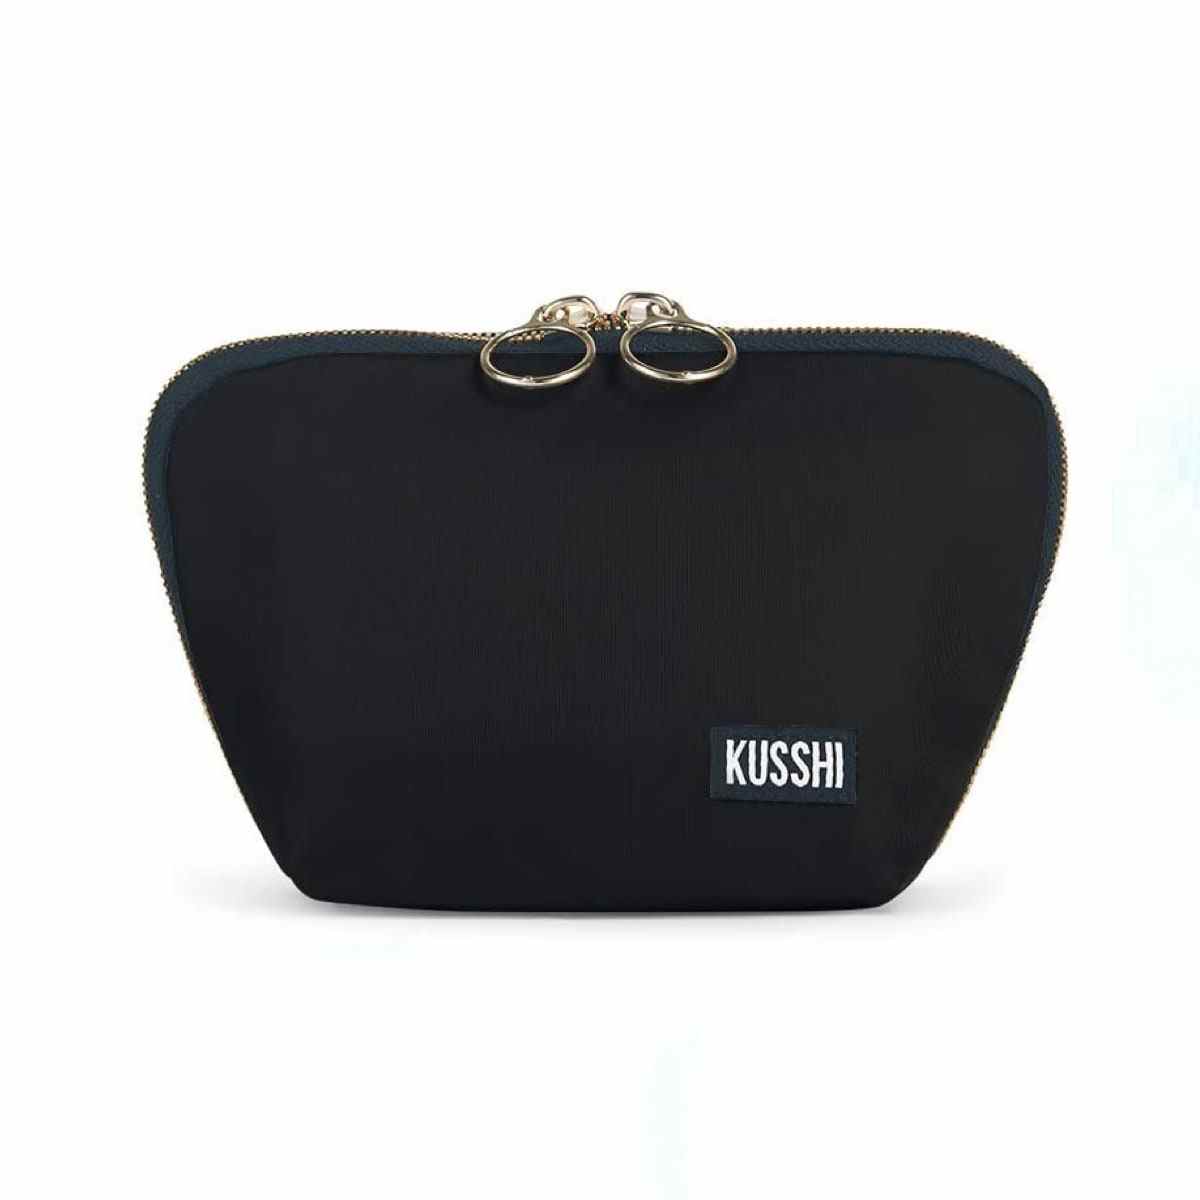 Black Kusshi Travel Everyday Makeup Bag on white background